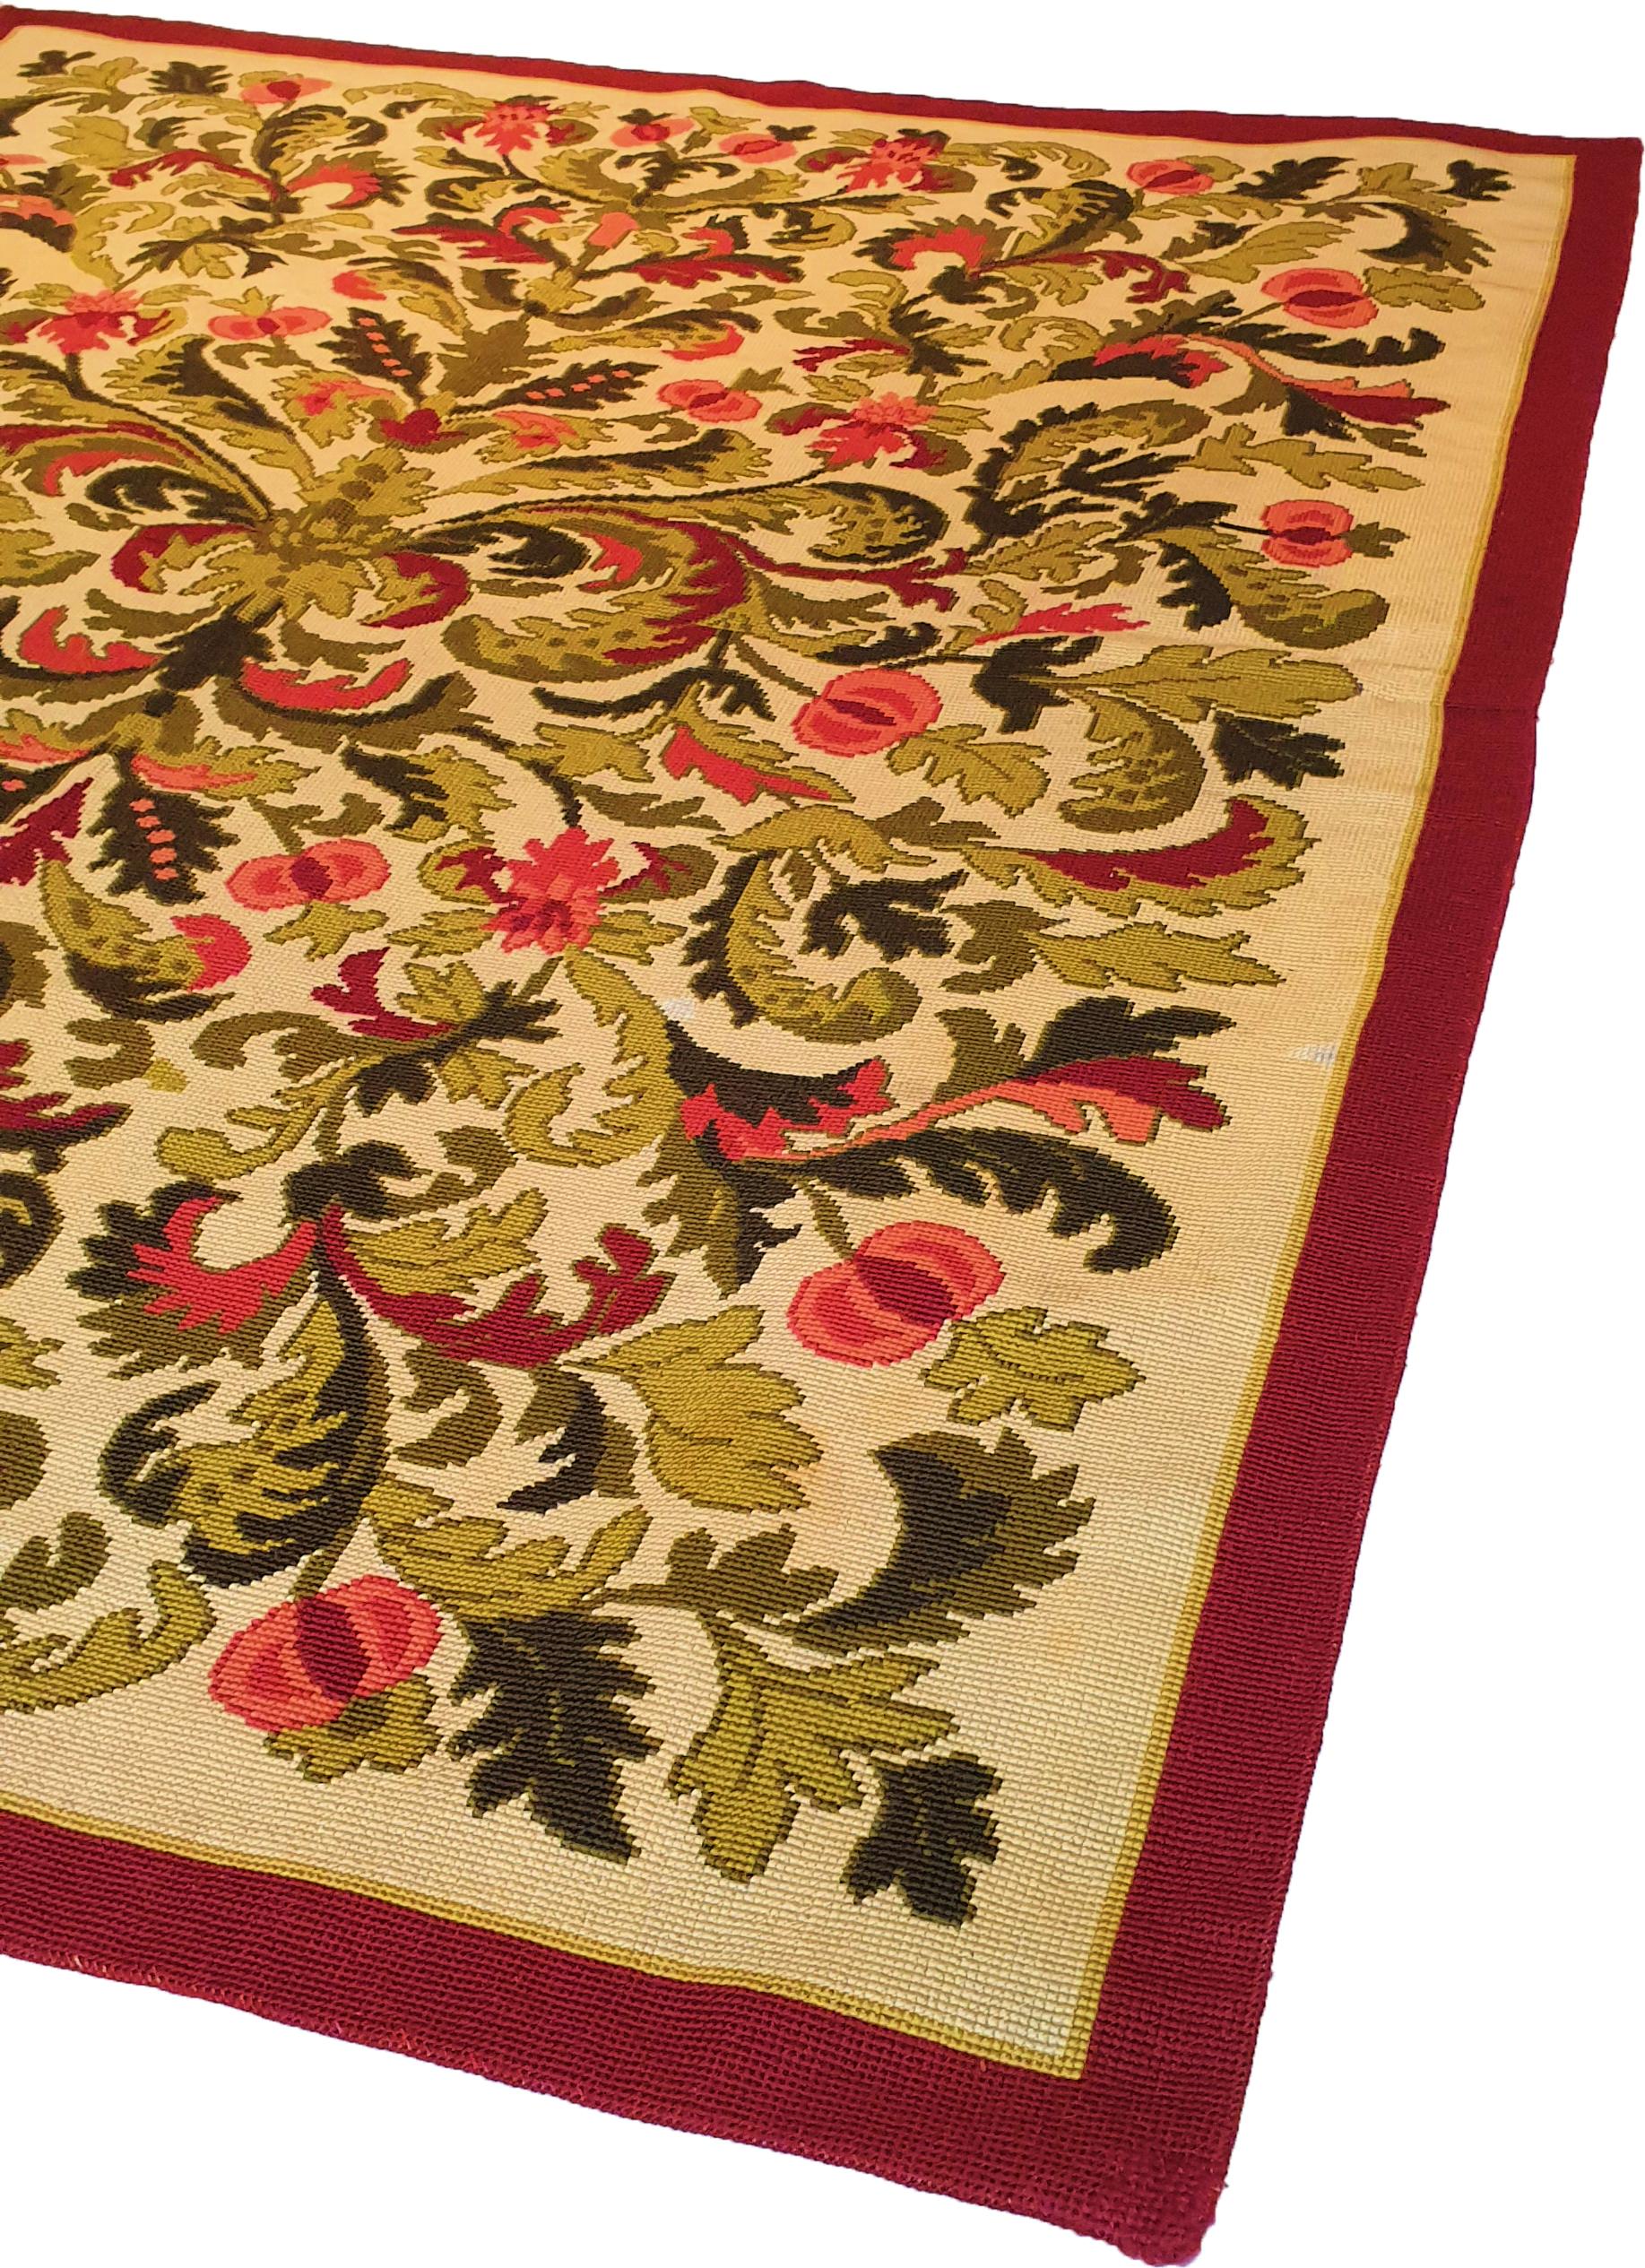 665 - Aubusson 19th century needlepoint rug.